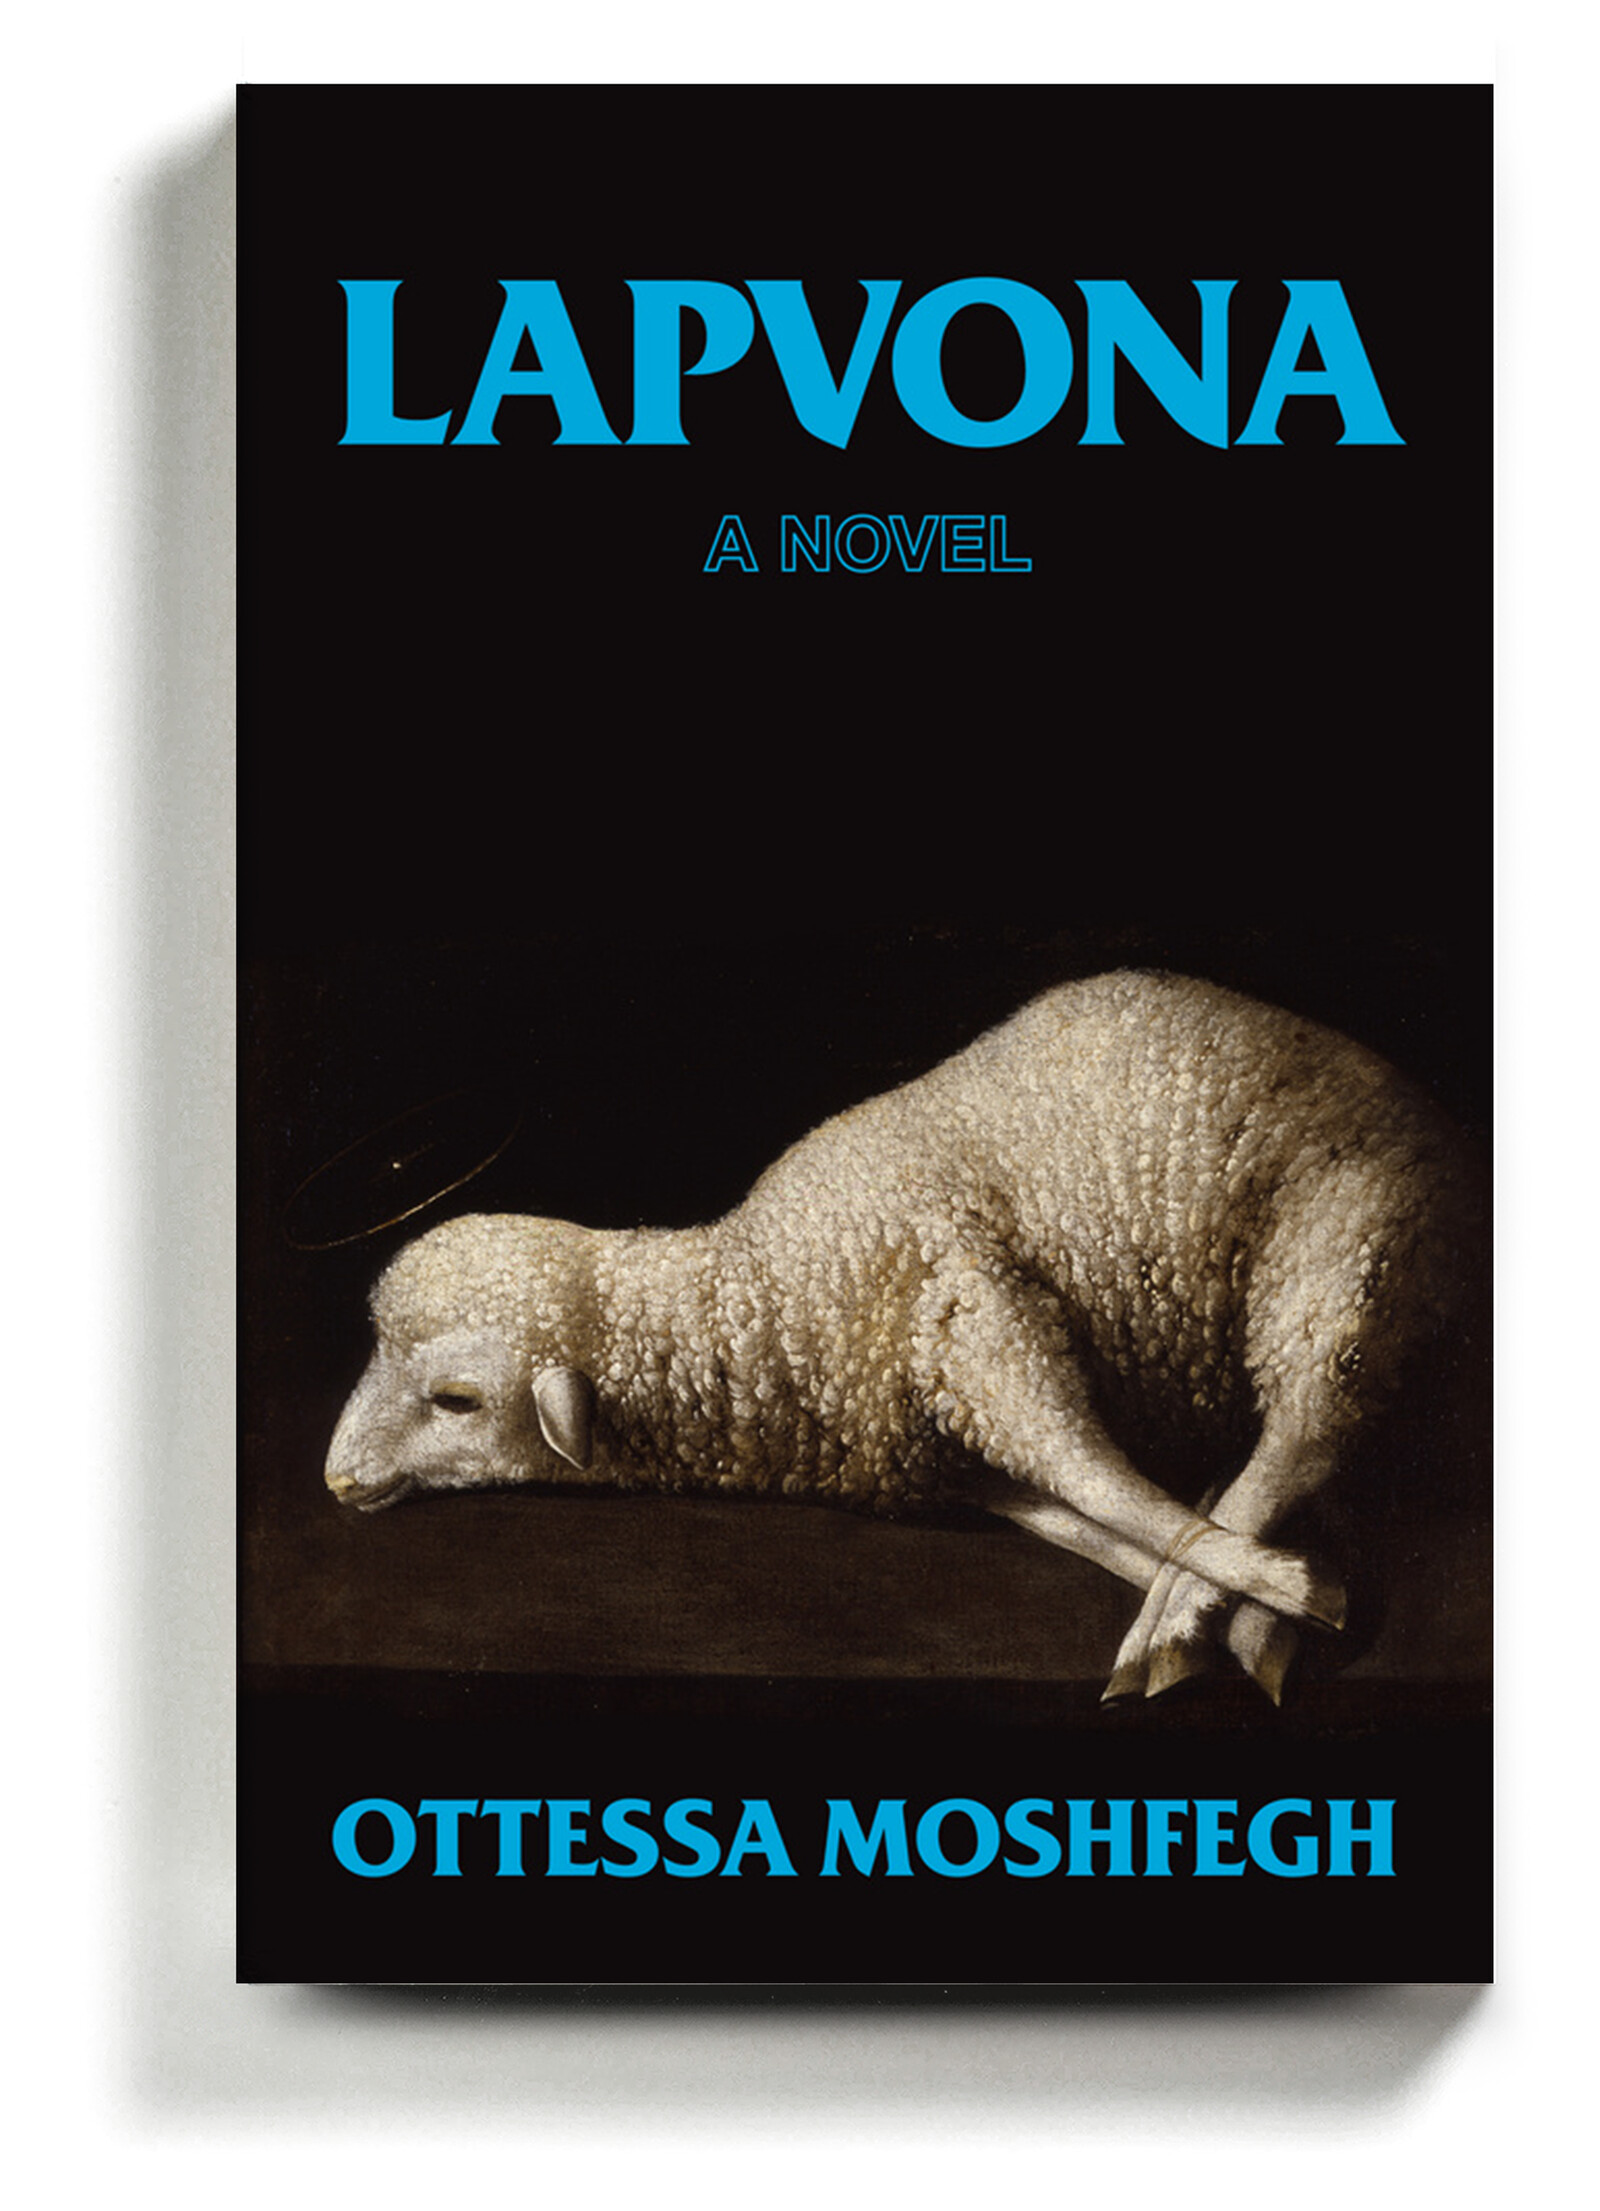 Bookhaus: Ottessa Moshfegh – Lapvona book launch at Strange Brew